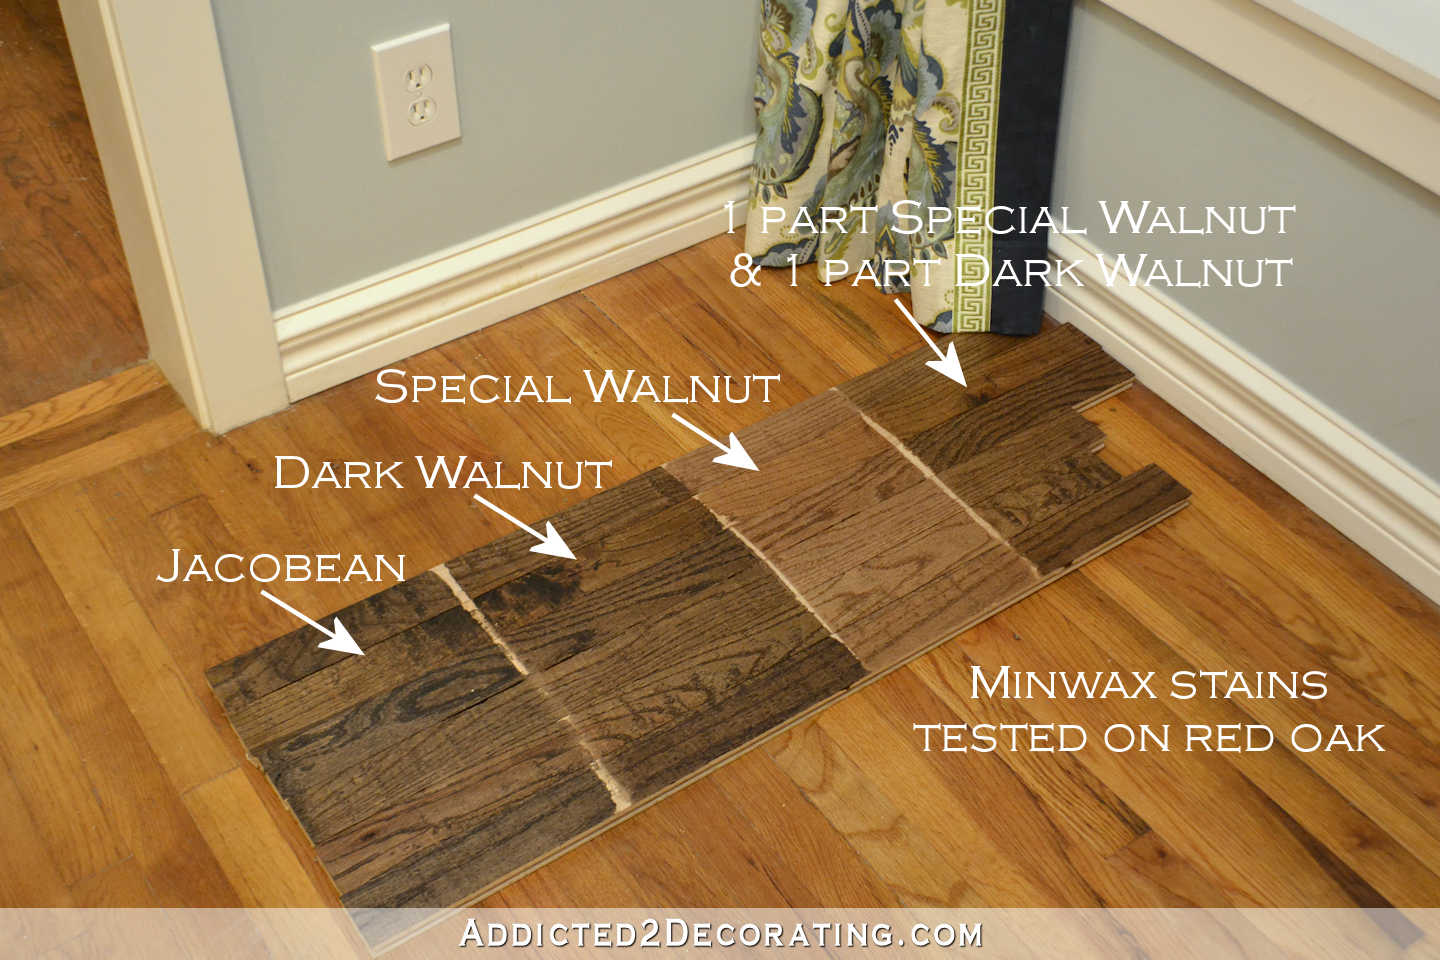 Minwax stain colors tested on red oak hardwood flooring - Jacobean,, Dark Walnut, Special Walnut - 1